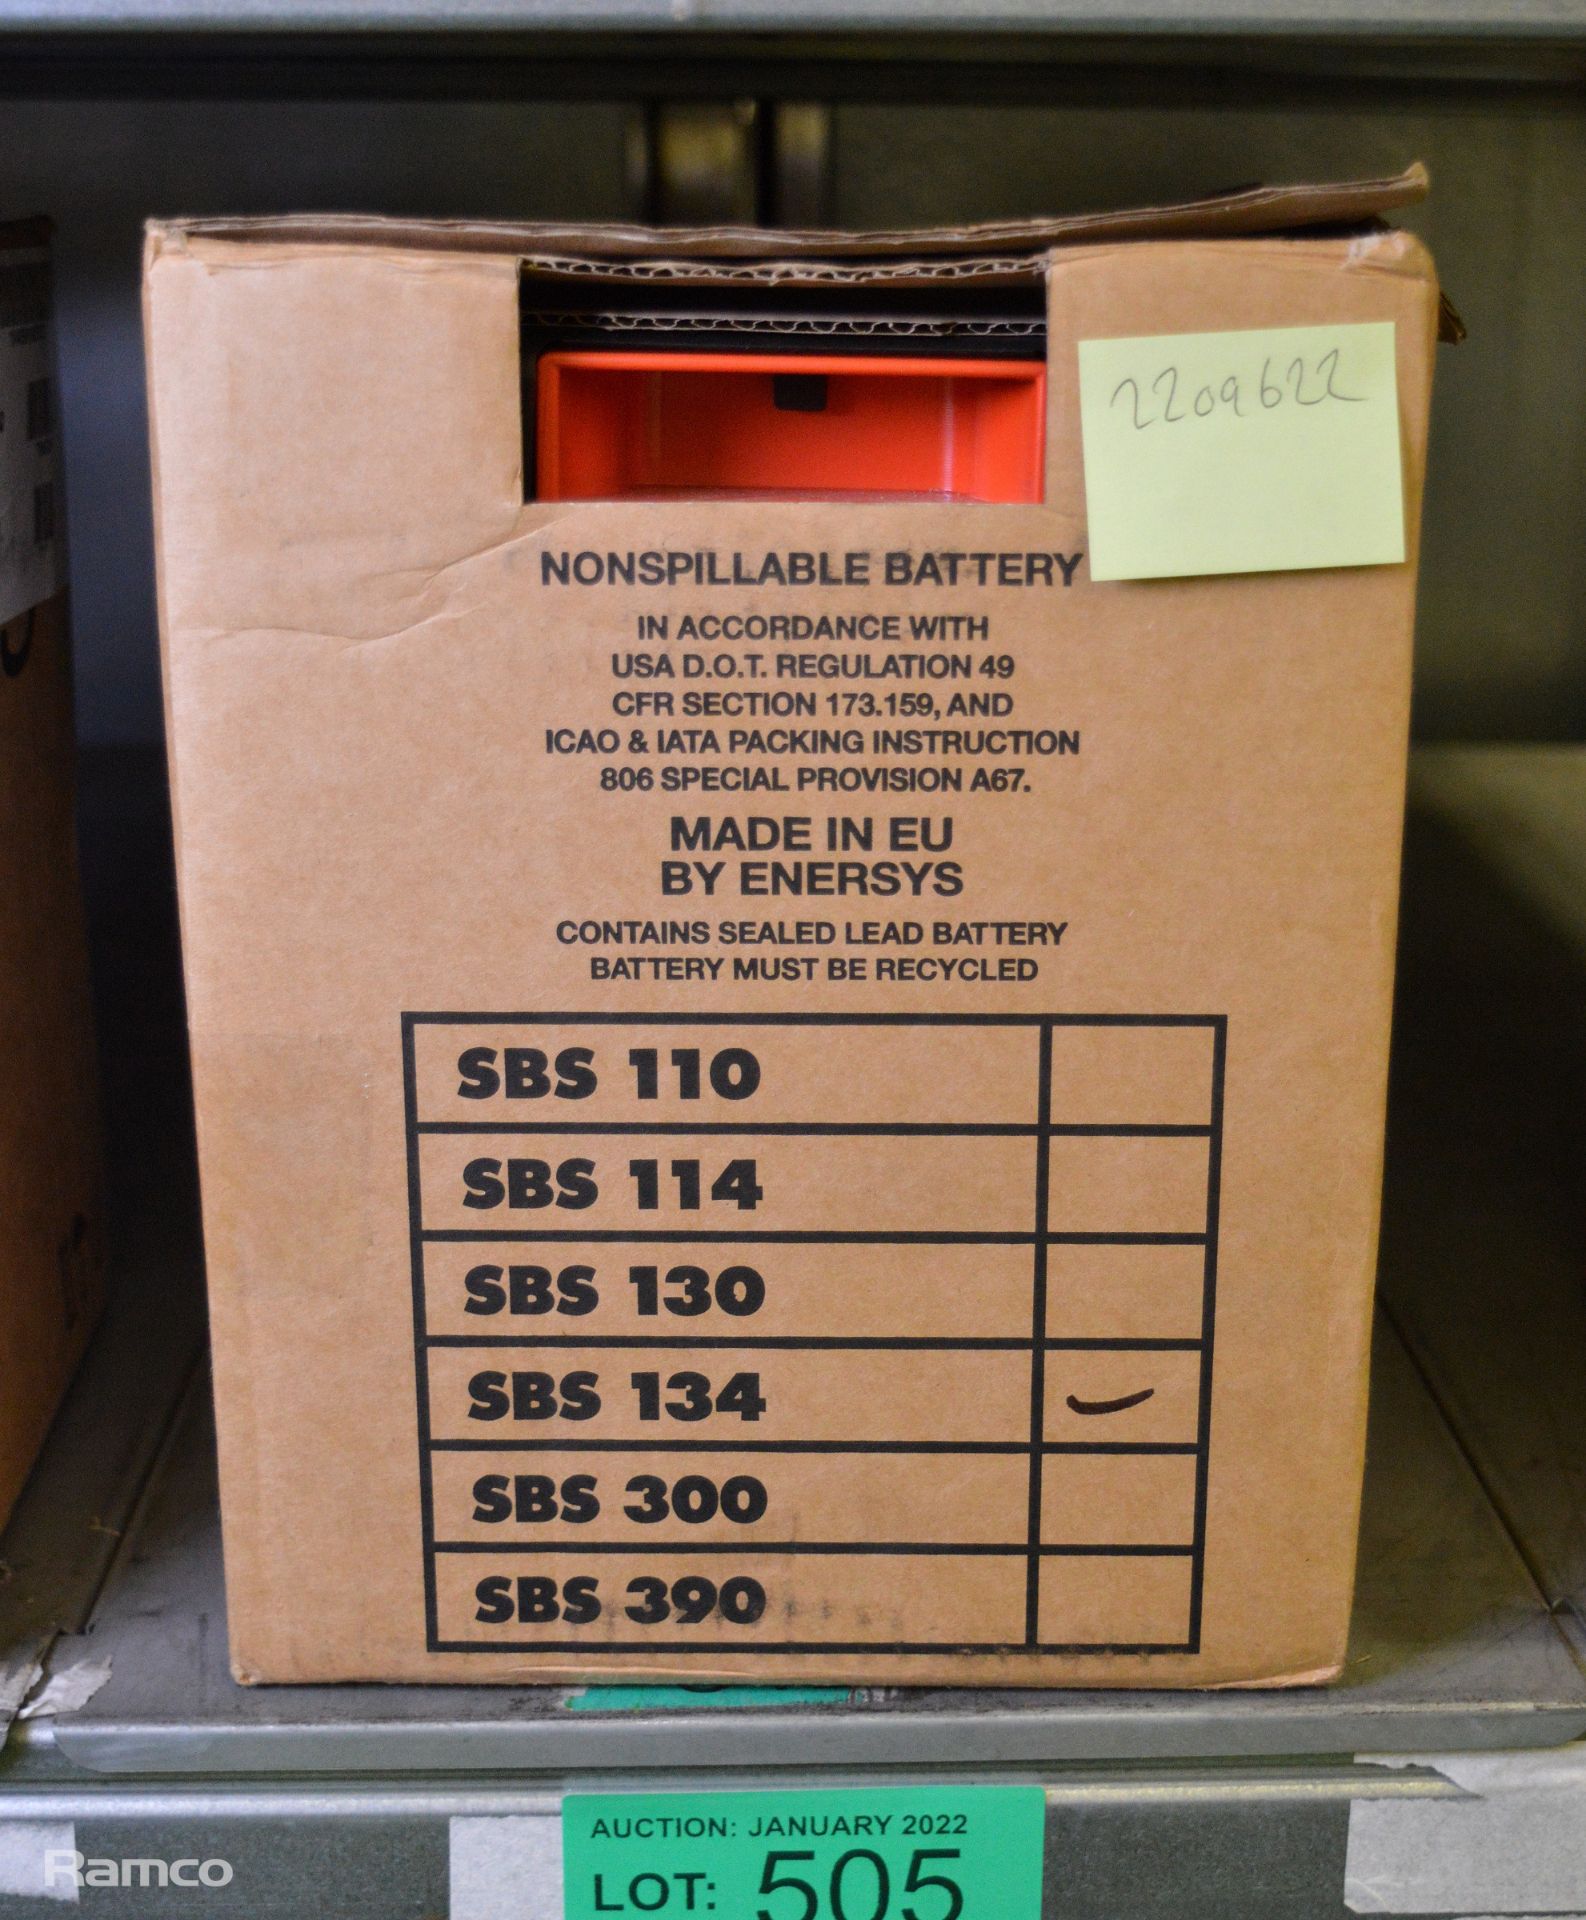 Power Safe SBS 134 Sealed Lead Acid Battery